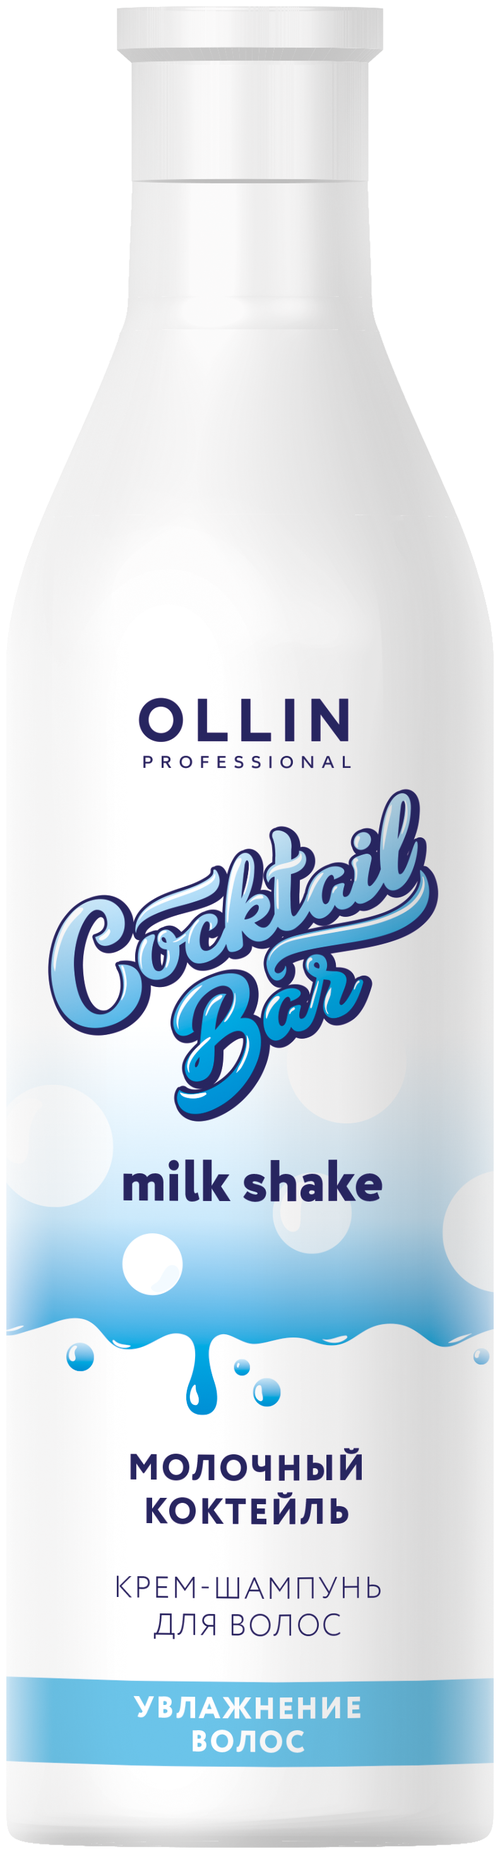 OLLIN Professional крем-шампунь Cocktail Bar Milk Shake Молочный коктейль, 500 мл